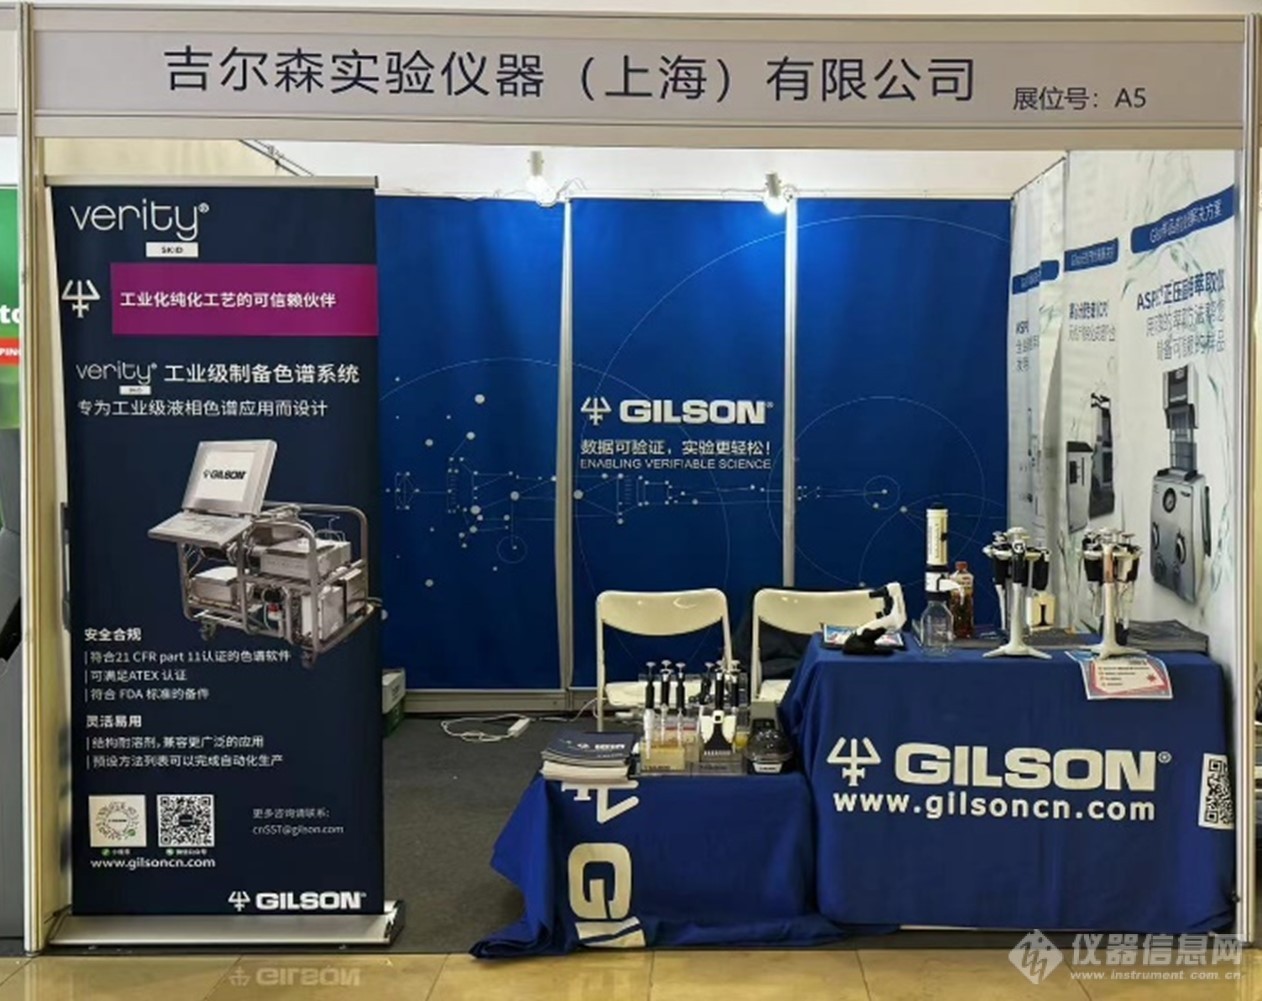 GILSON | 中国化学会第34届学术年会参展